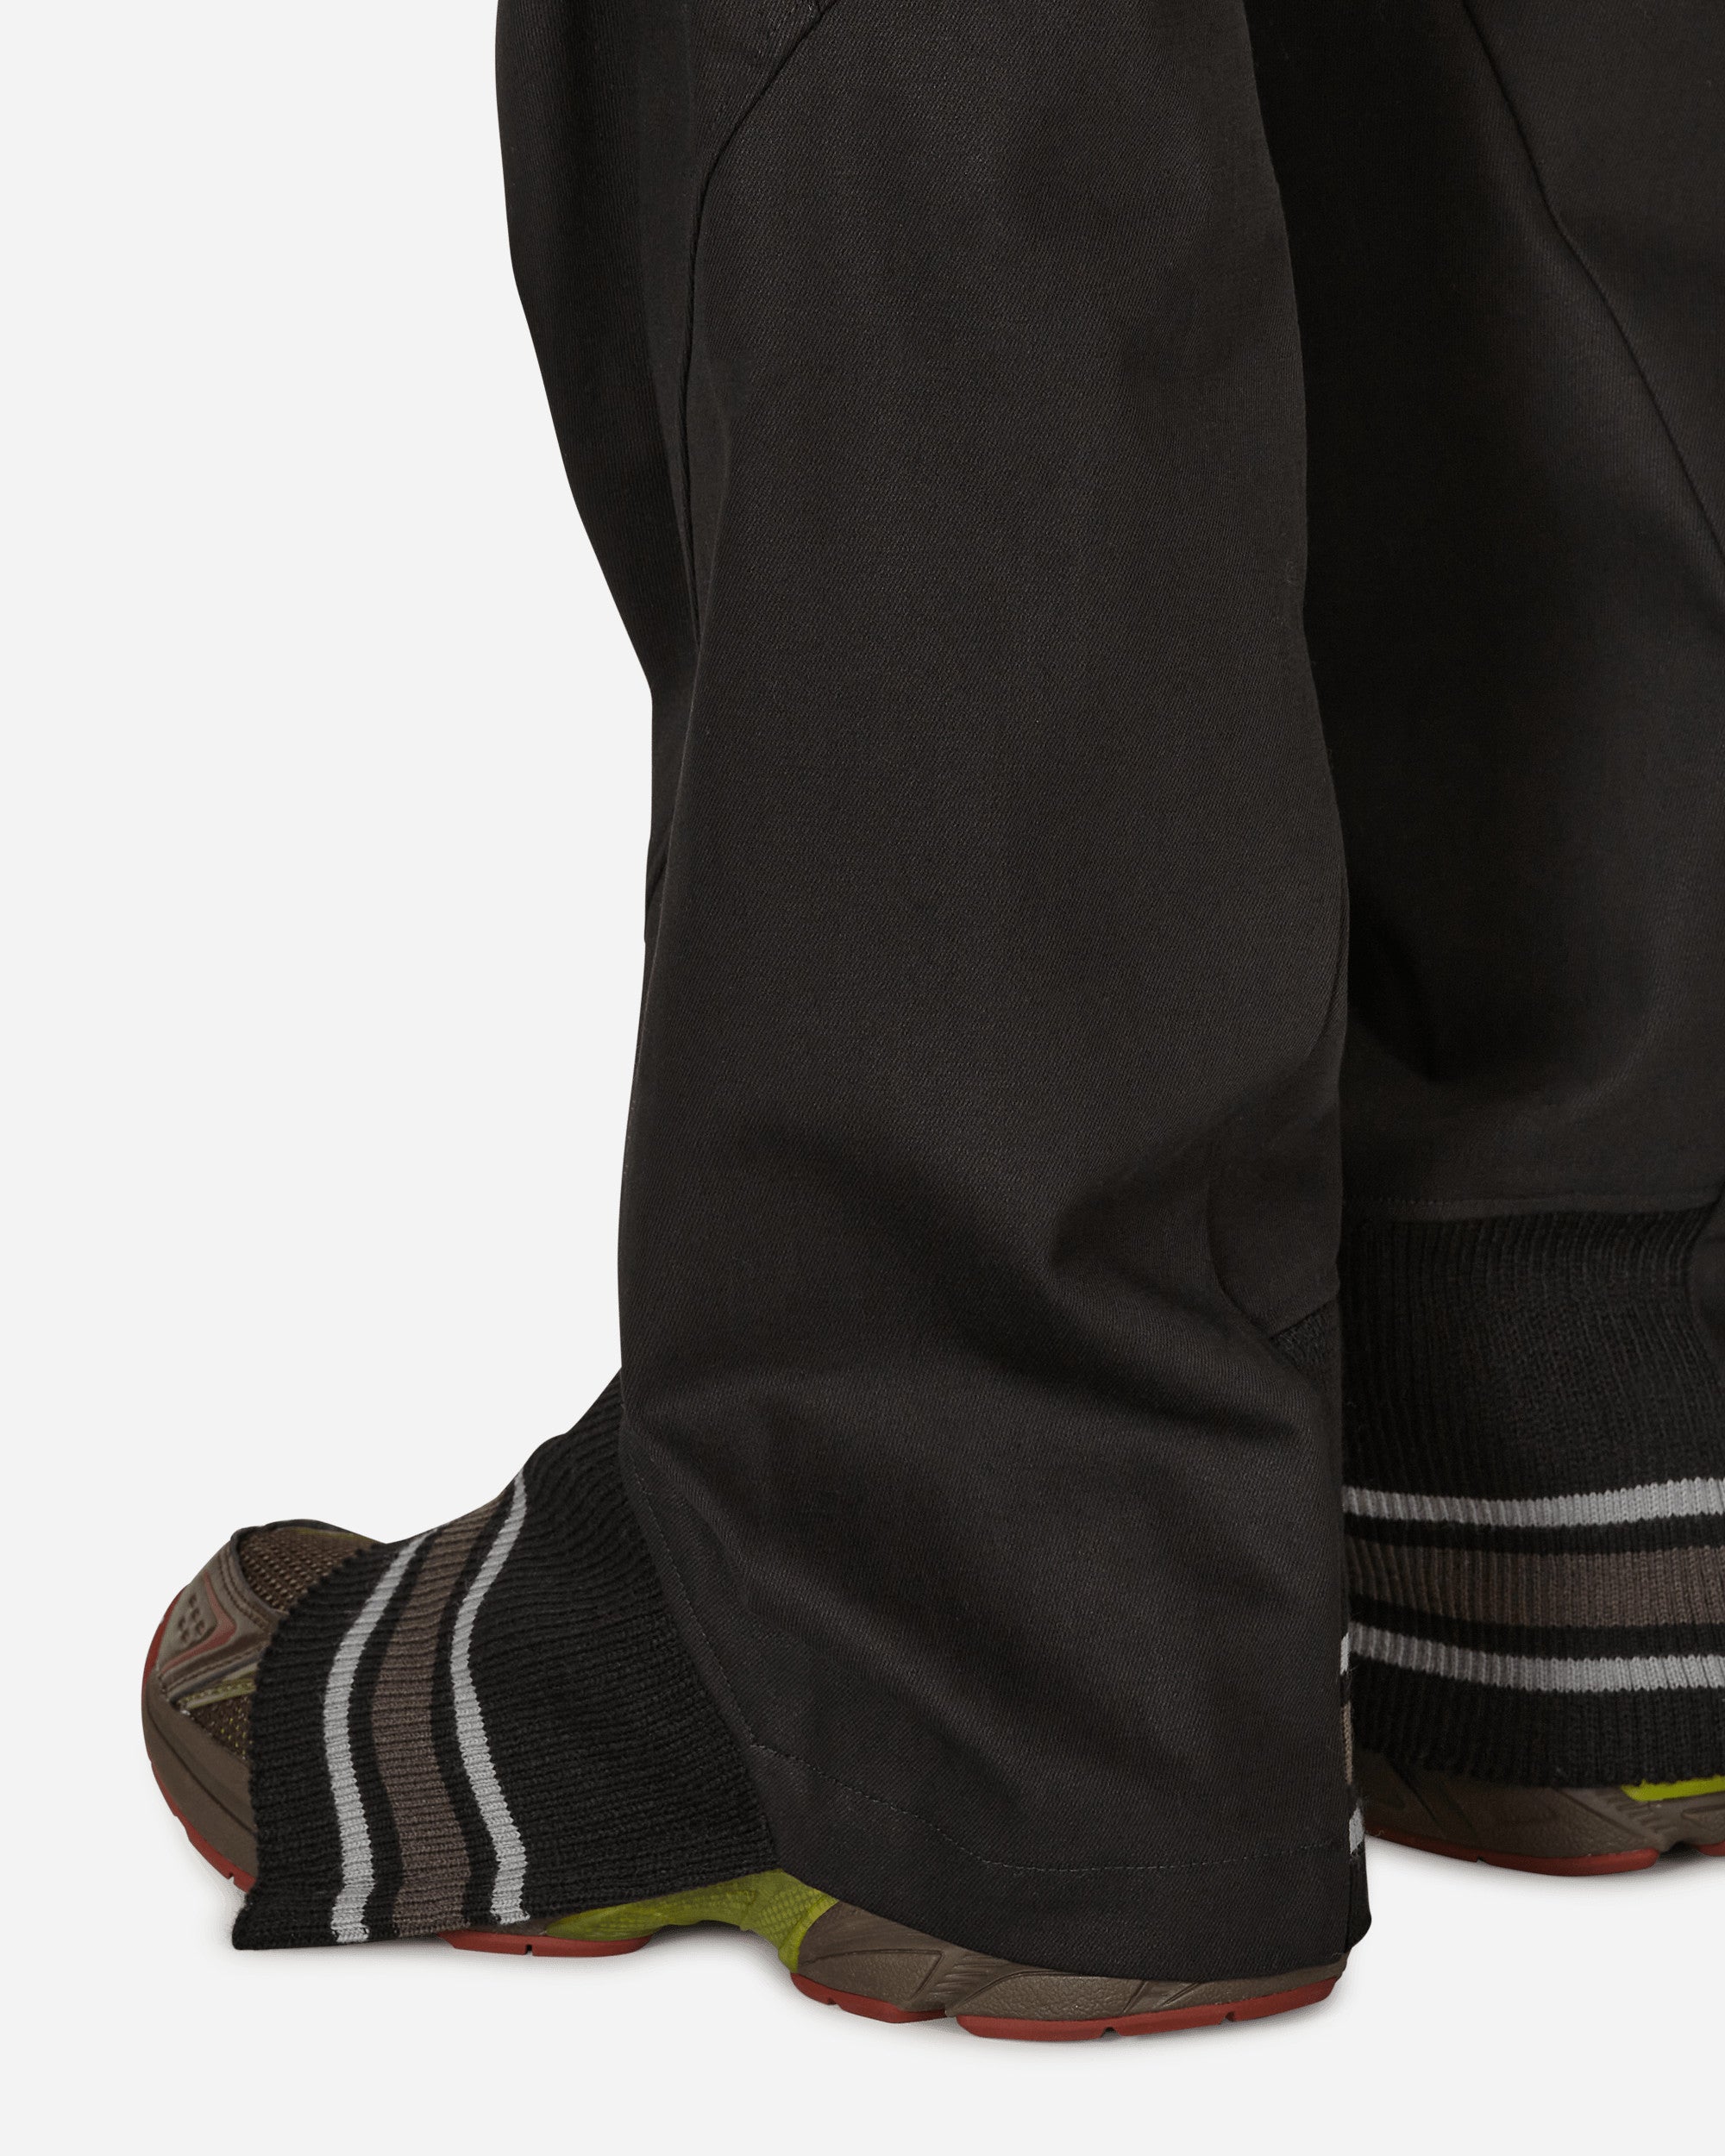 Kiko Kostadinov Valakas Cargo Trousers Jet Black  Pants Trousers KKAW22T02-5  001